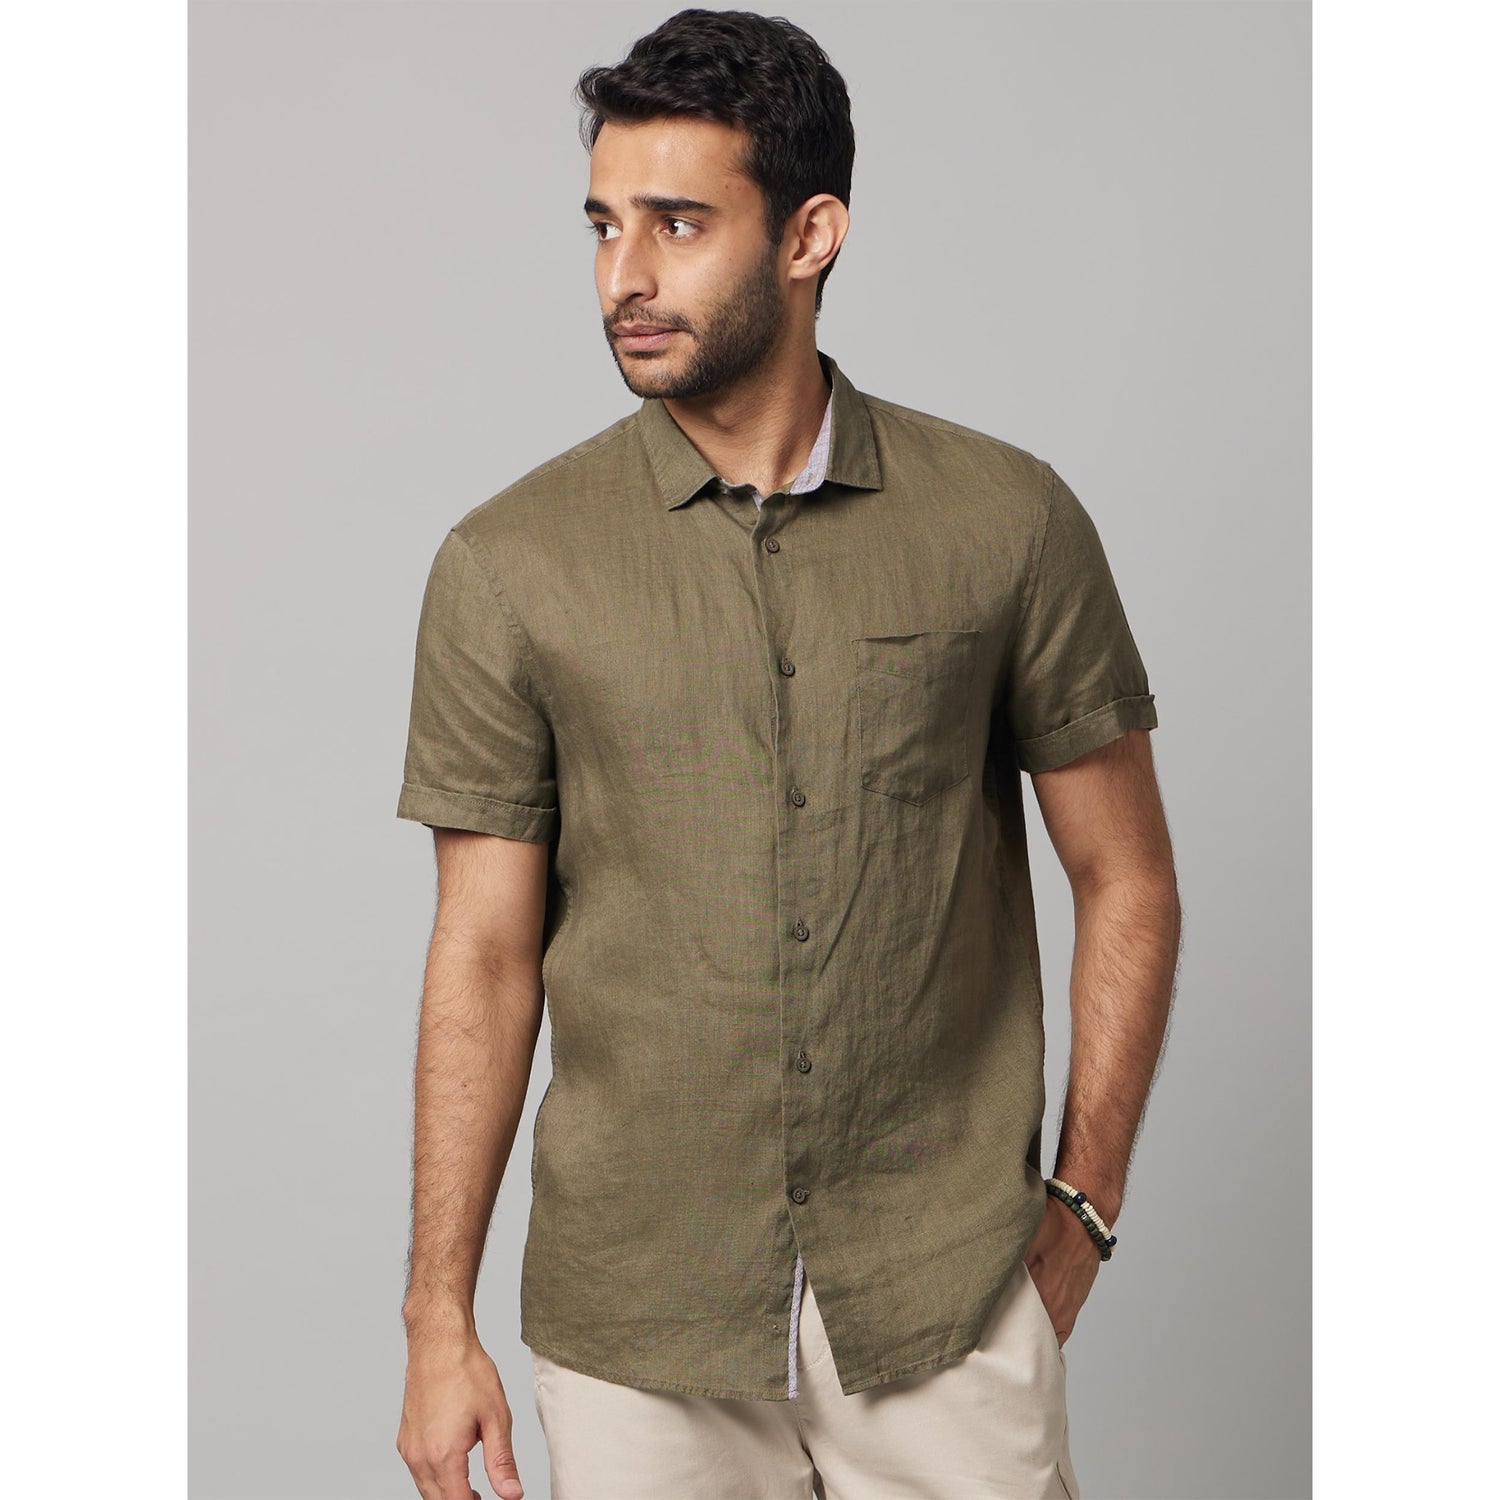 Olive Green Classic Short Sleeves Linen Casual Shirt (DACARAIN)